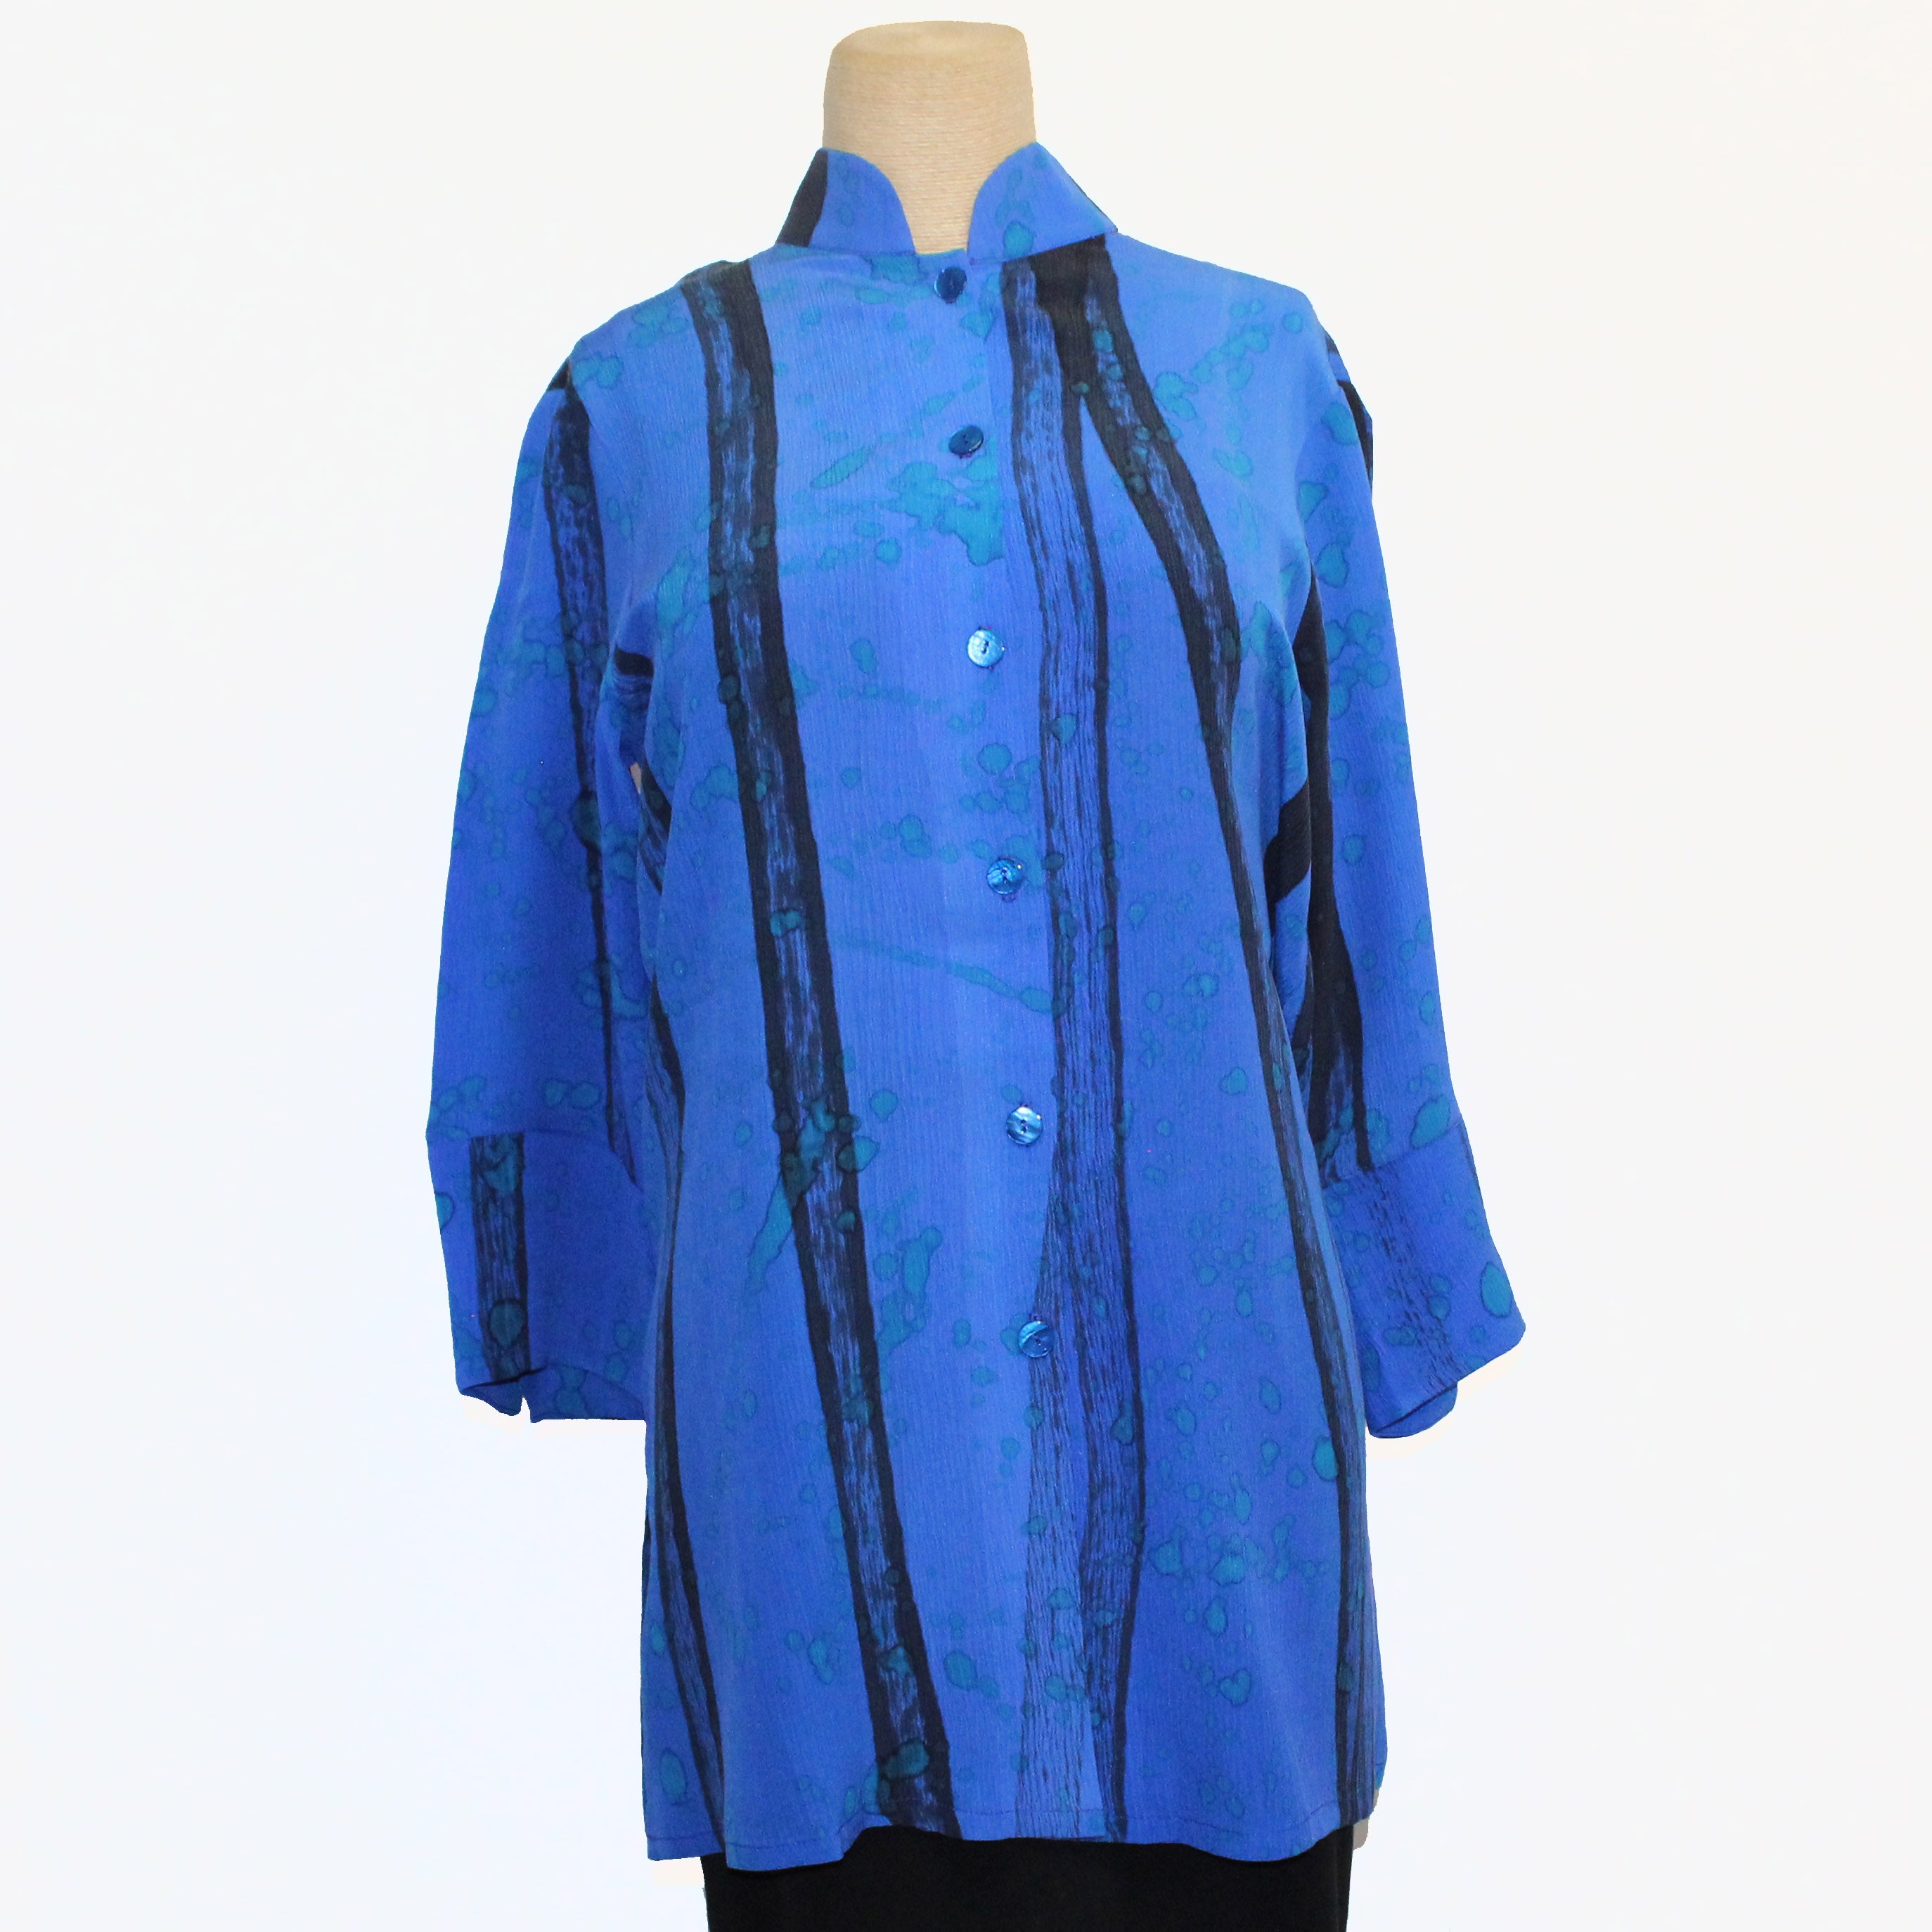 Kay Chapman Shirt, Split Sleeve, Branch & Splatter, Blue/Turquoise/Black, S